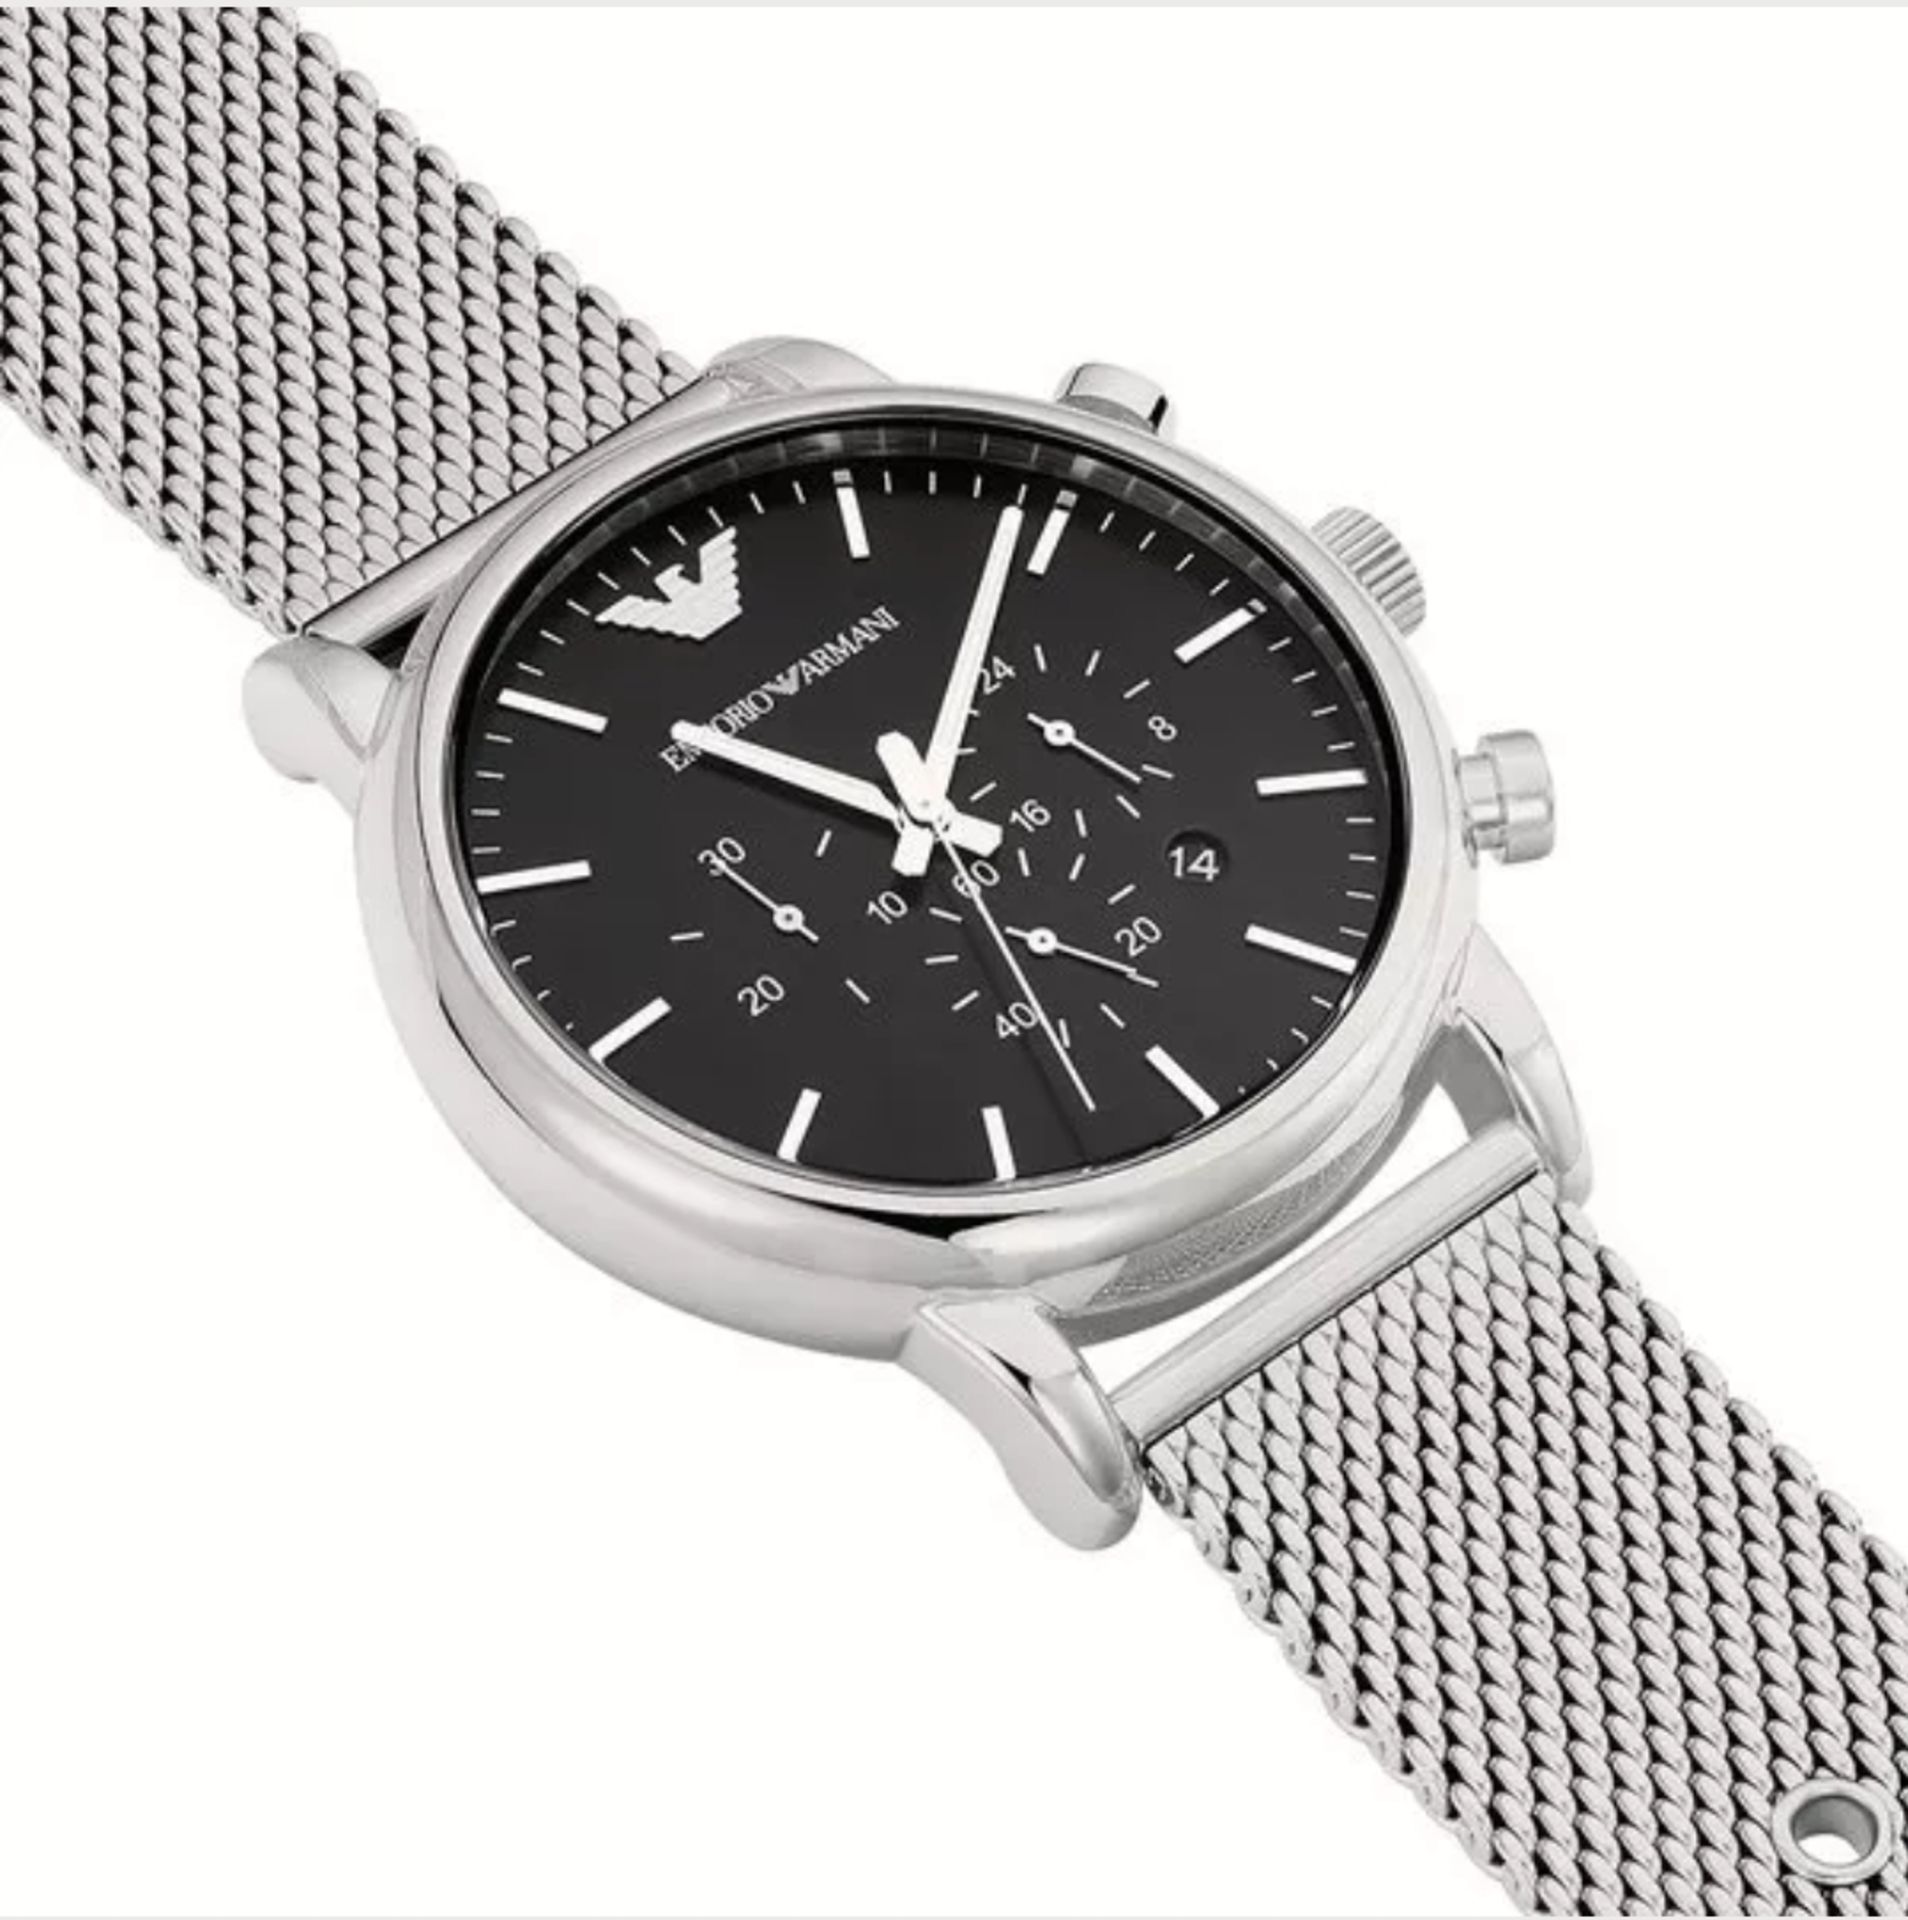 Emporio Armani AR1808 Men's Black dial Silver Mesh Band Quartz Chronograph Watch - Image 10 of 11